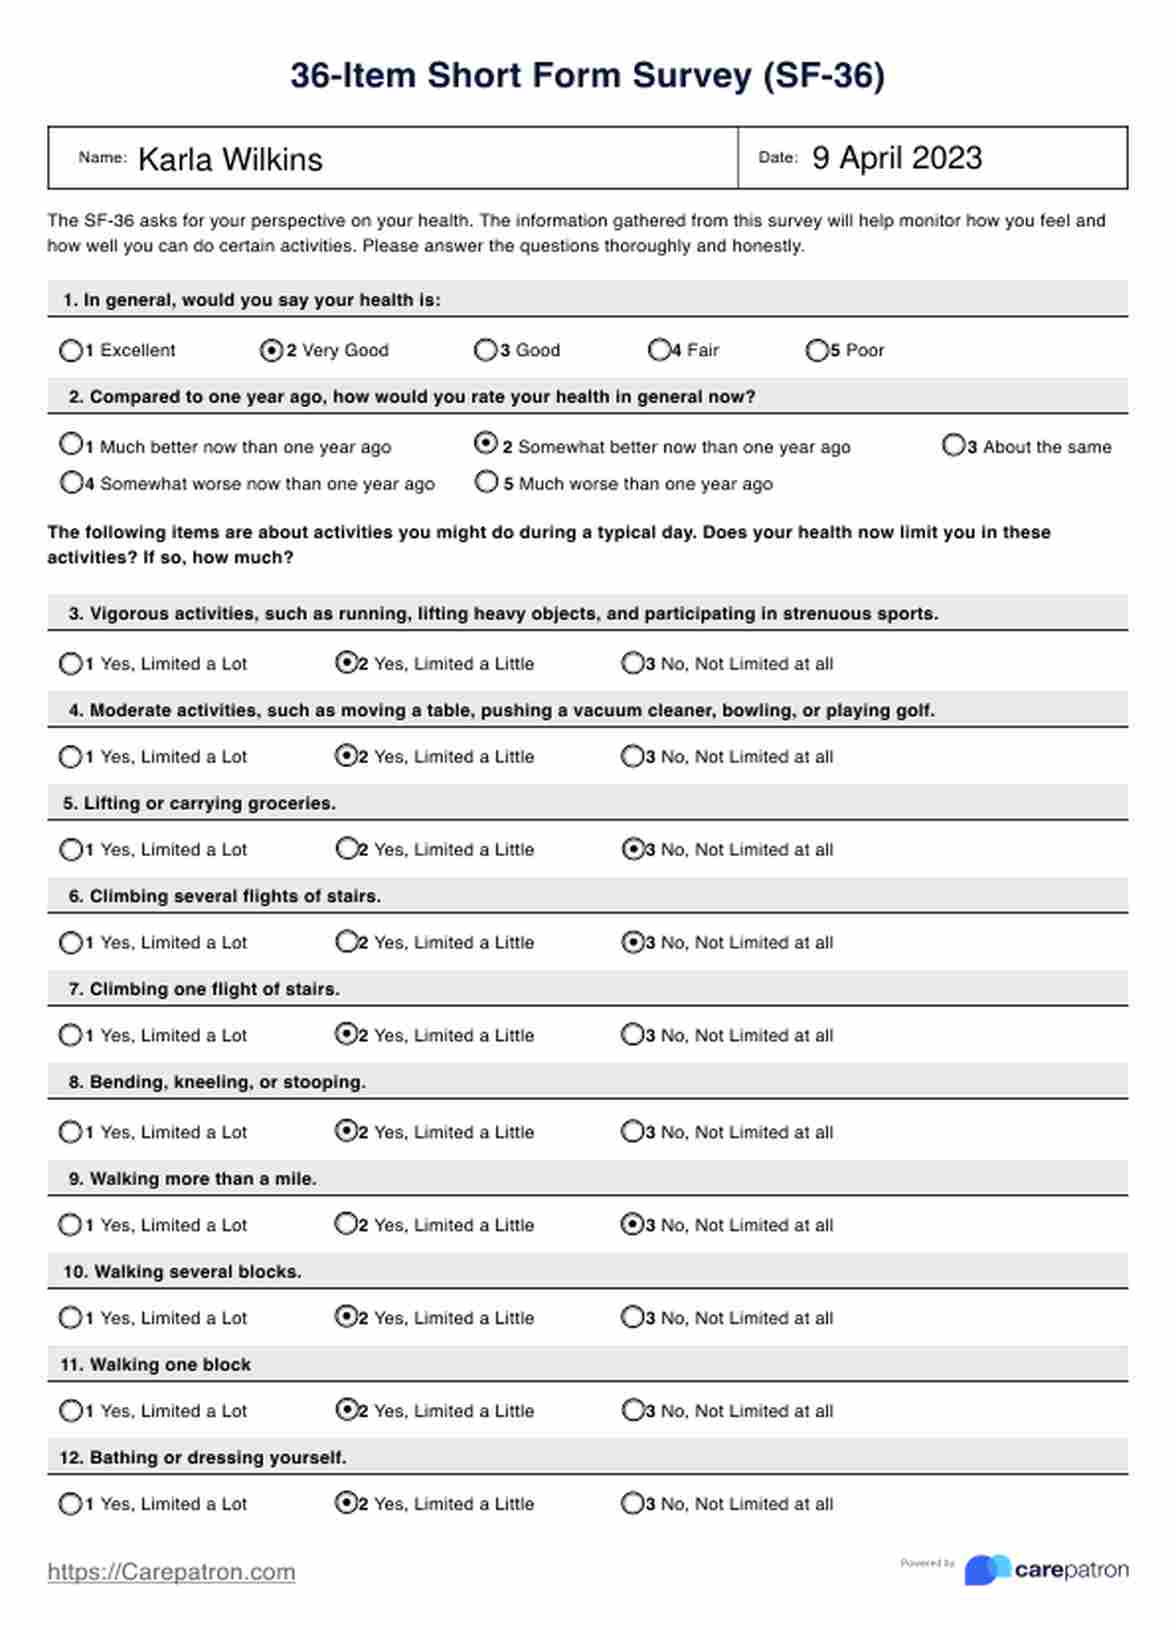 36-Item Short Form Survey PDF Example